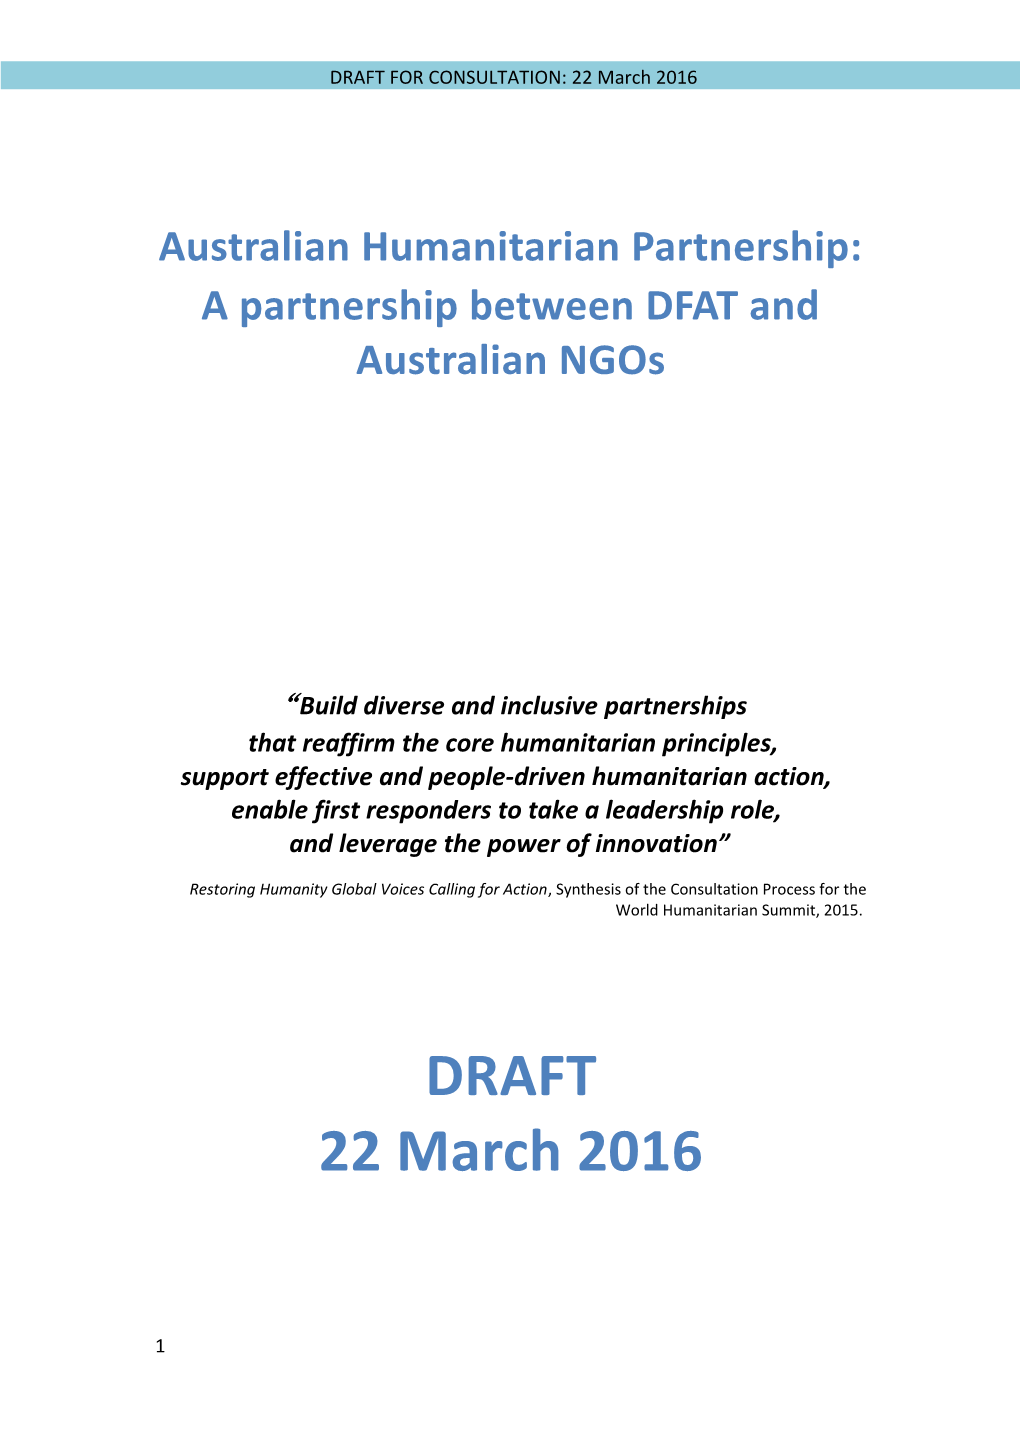 Australian Humanitarian Partnership: a Partnership Between DFAT and Australian Ngos